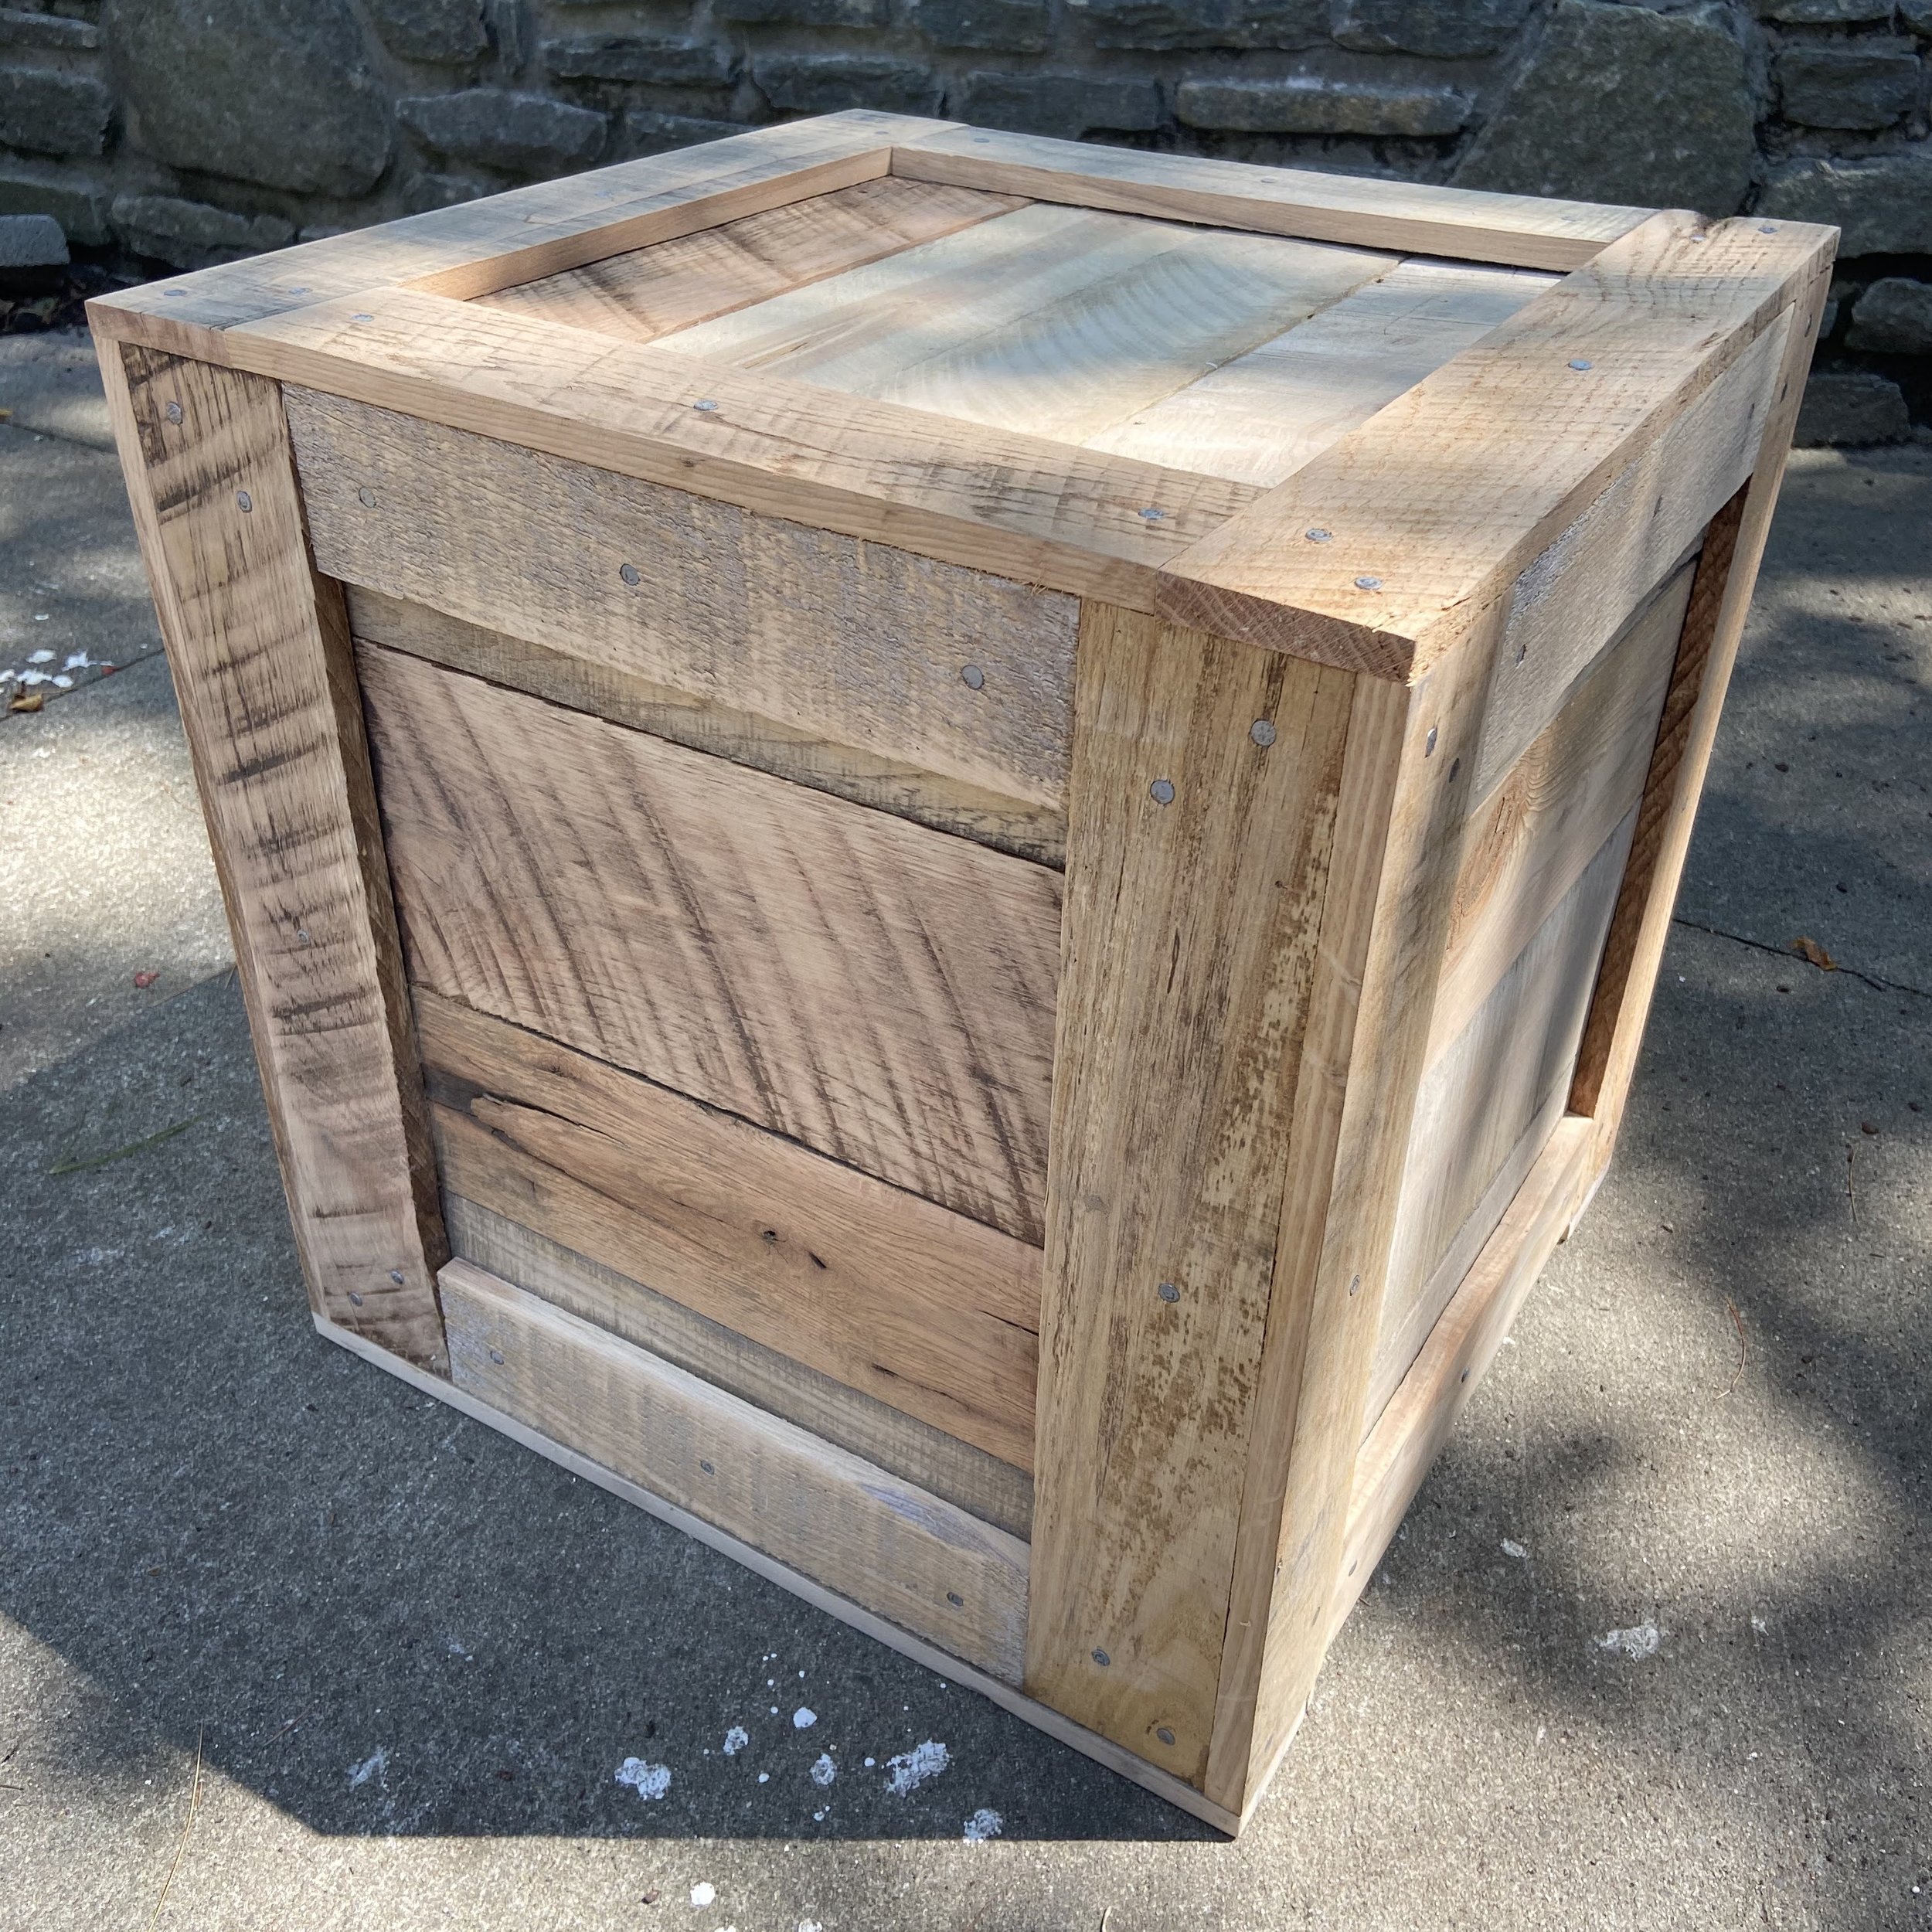  sample crate pallet wood 